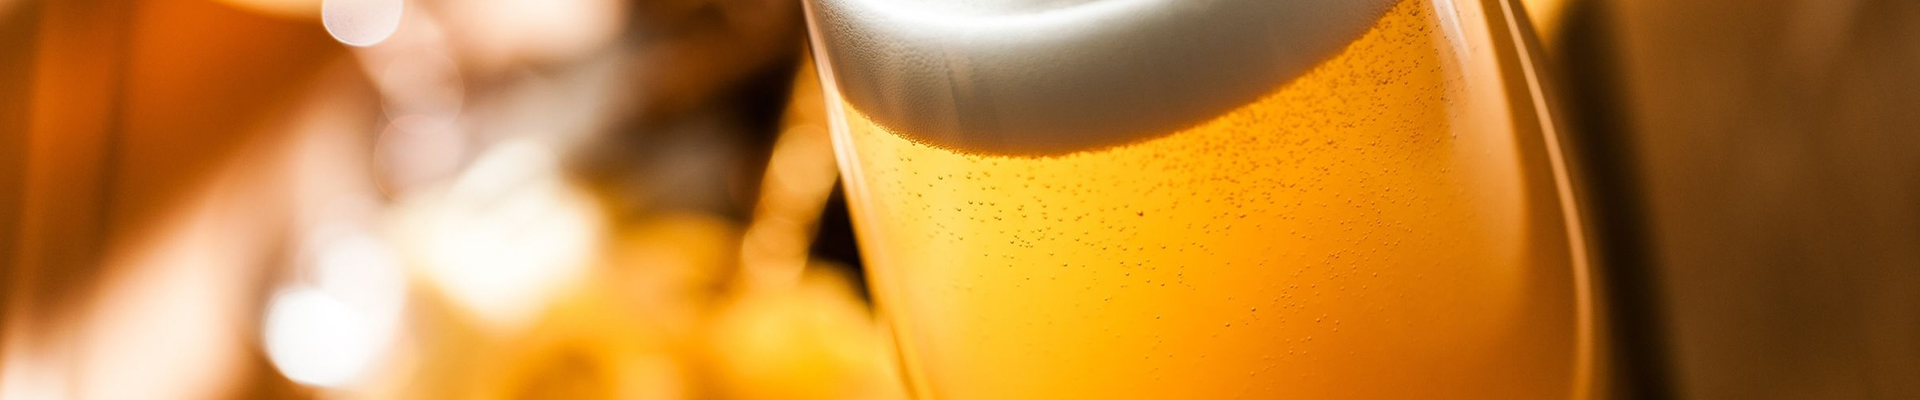 drankenhandel-nectar-utrecht-bier02-header